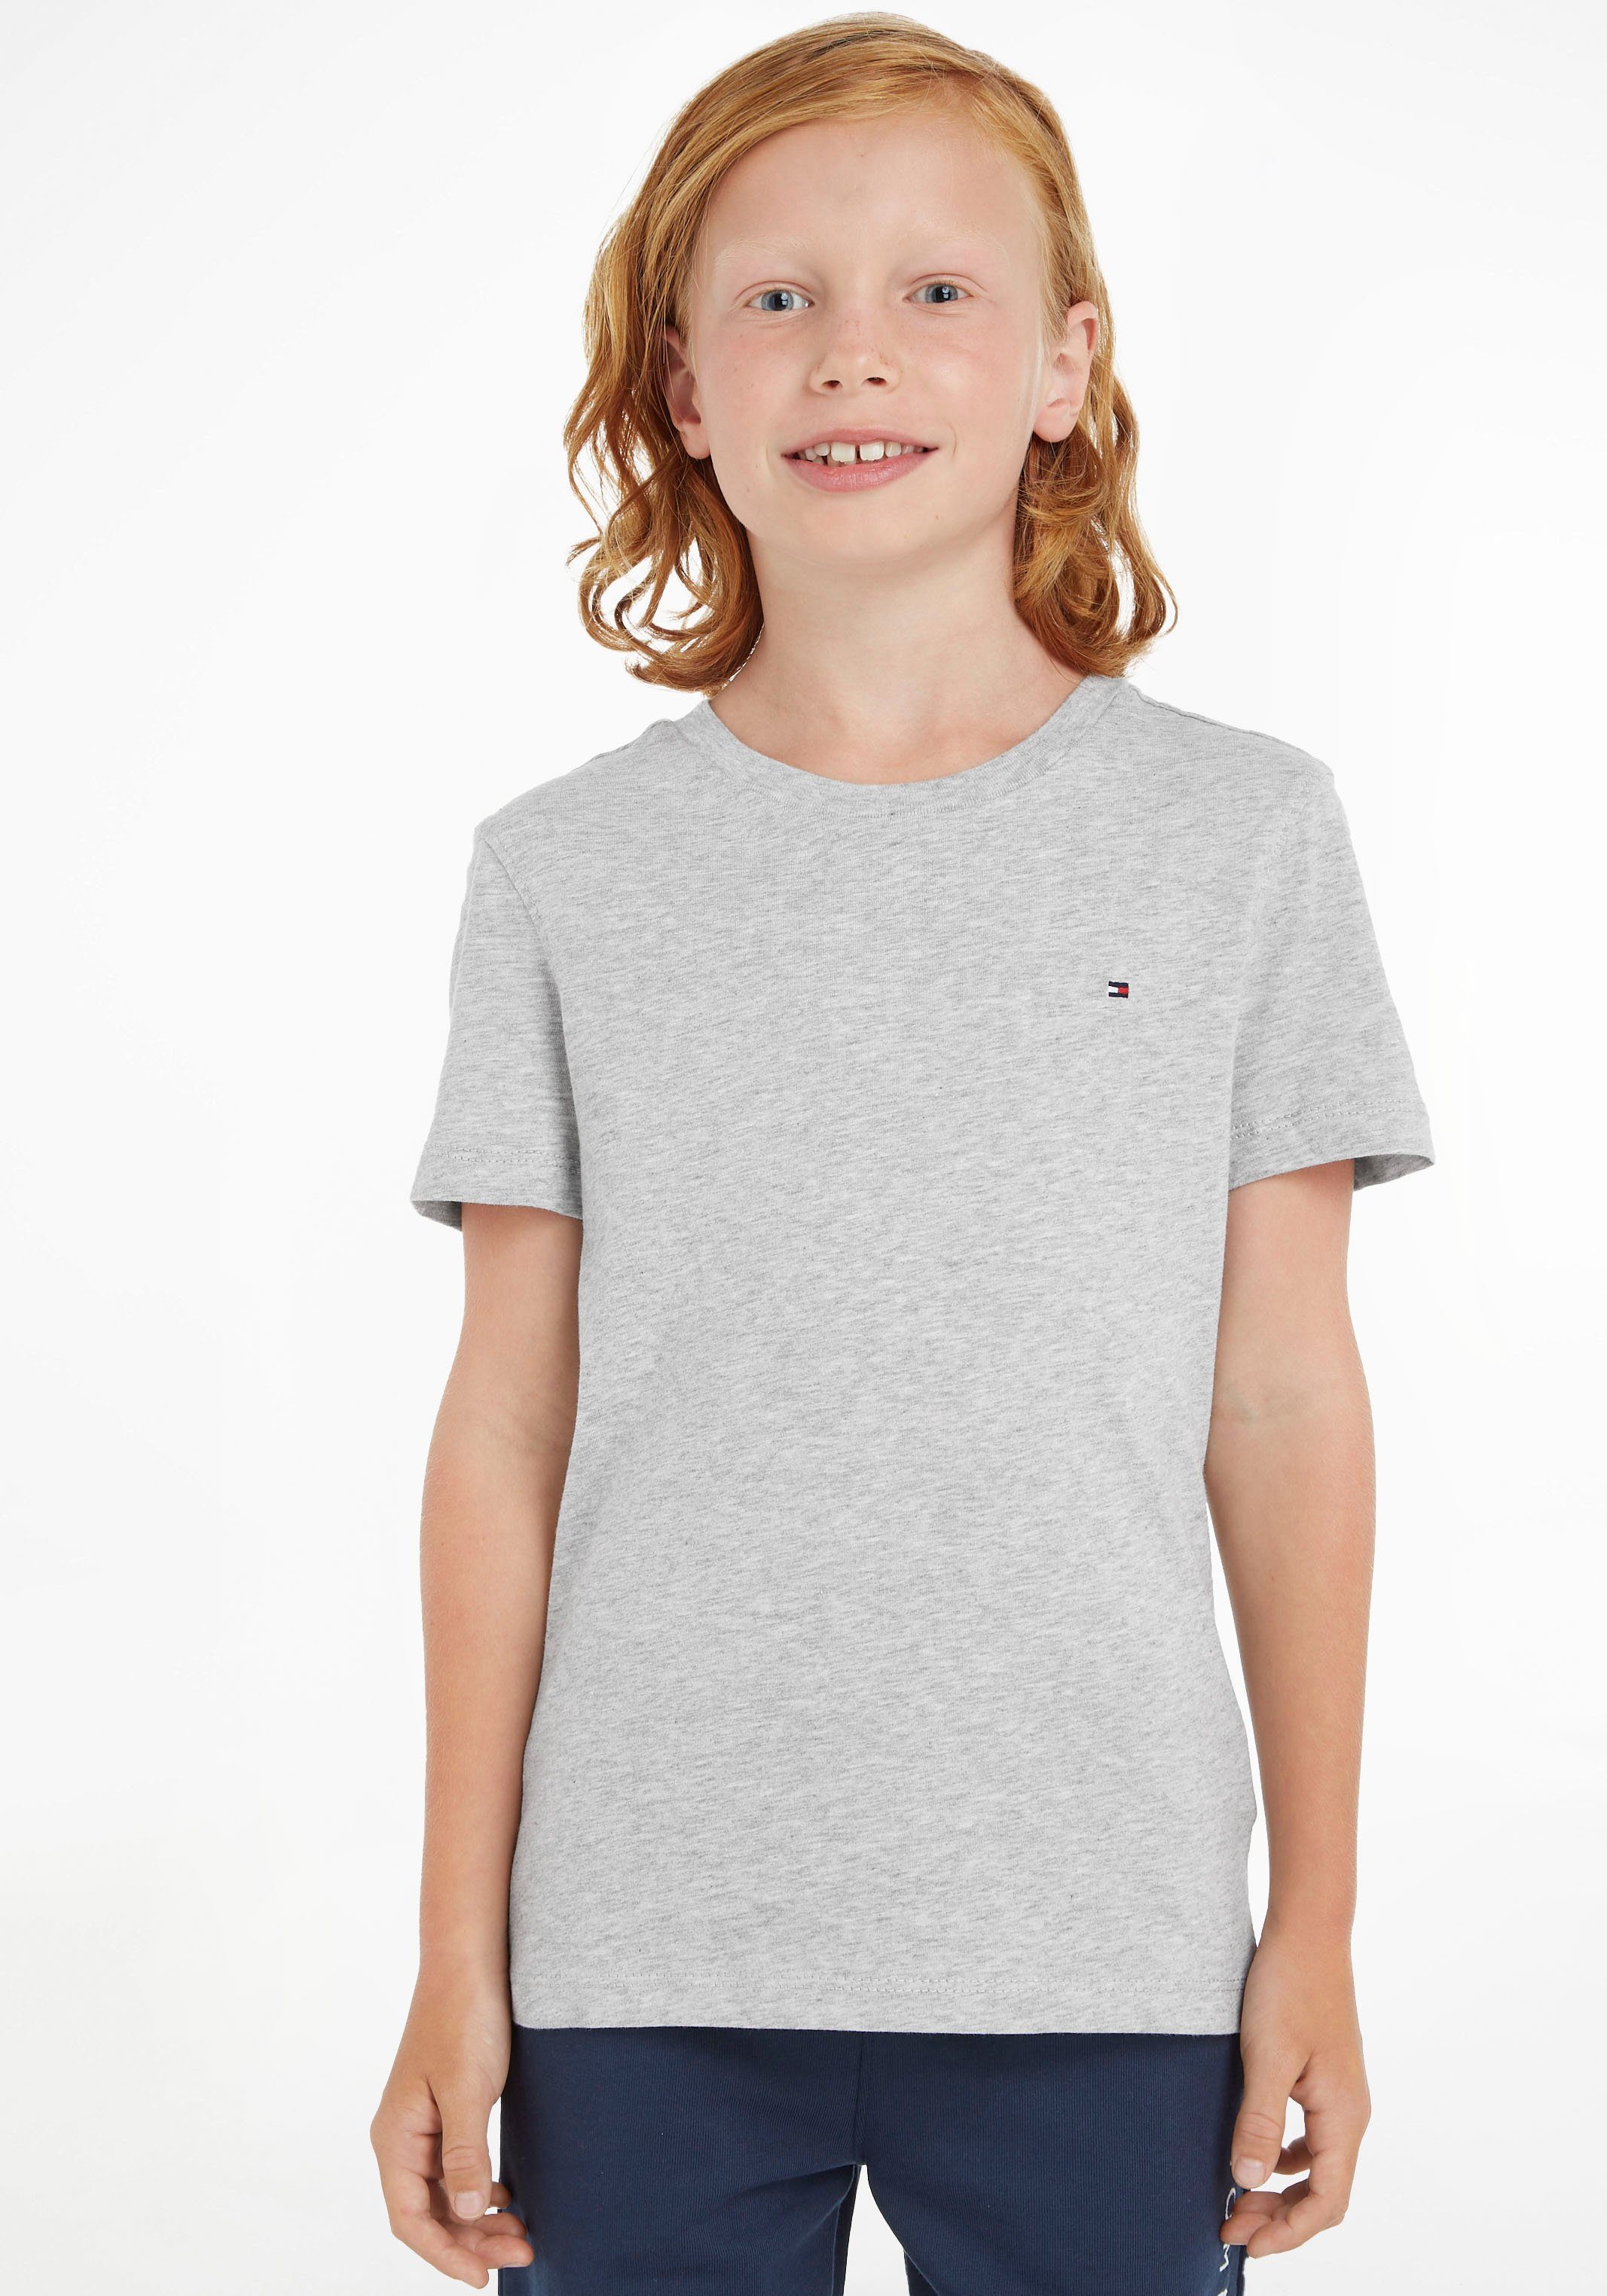 Hilfiger BASIC Kinder Kids KNIT MiniMe BOYS Junior CN T-Shirt Tommy